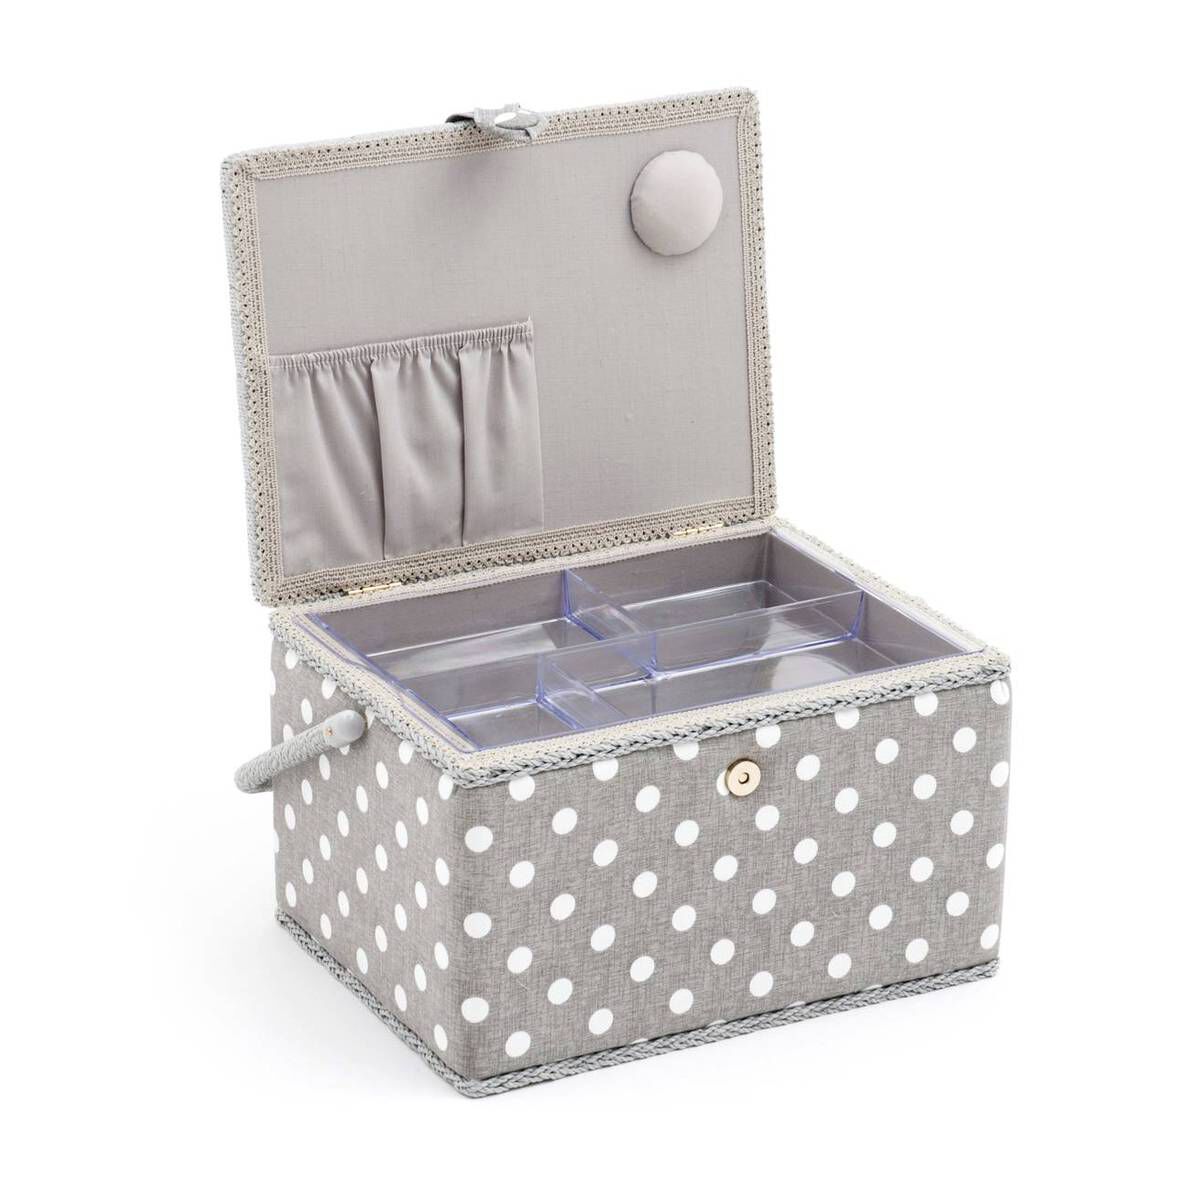 D/W/H 2 Drawers Box Size: : 25 x 25 x 19cm Hobby Gift Large Sewing Box Grey Polka Dot Design 